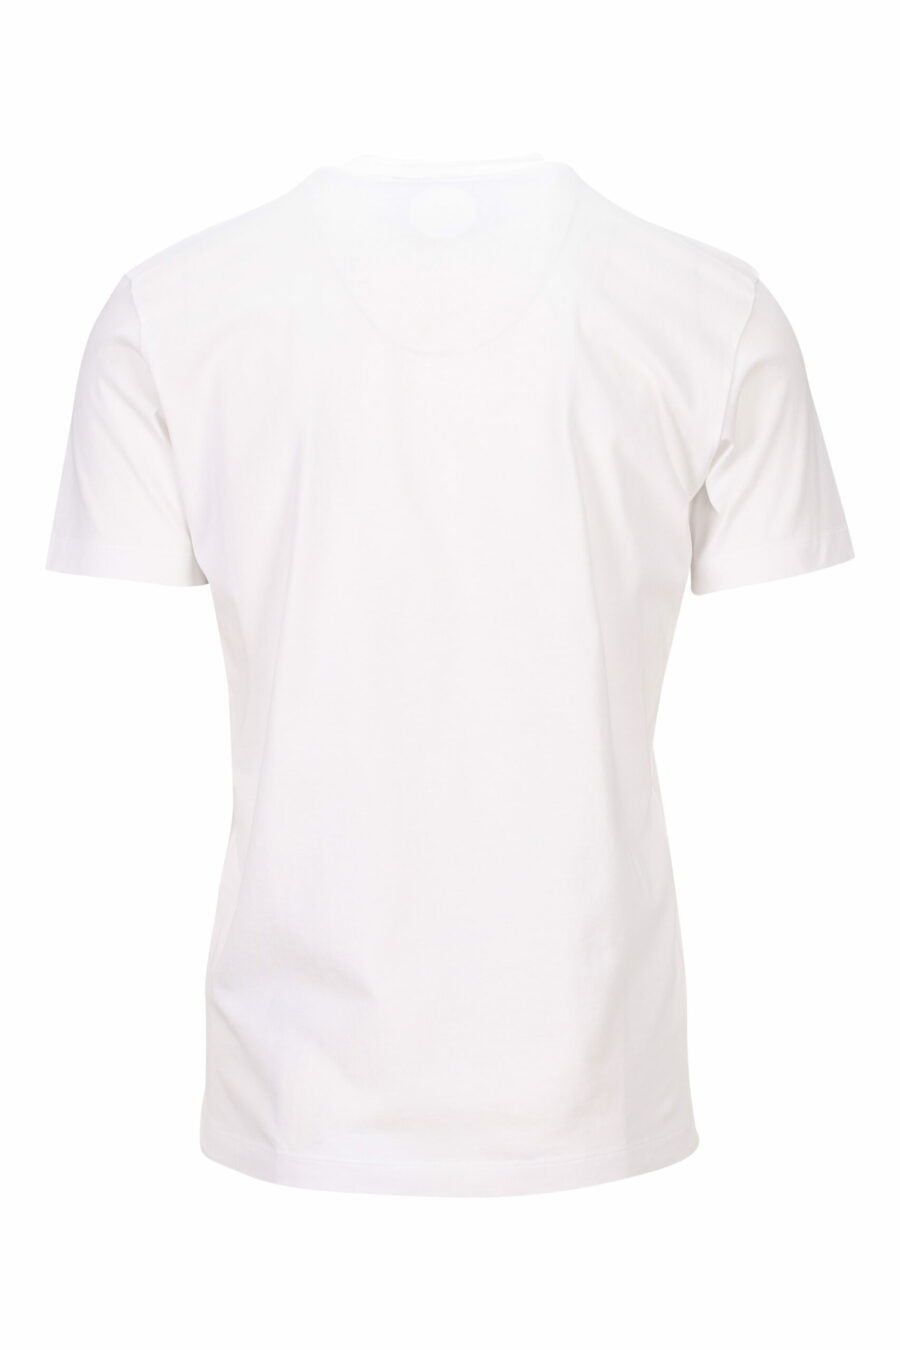 T-shirt blanc avec minilogo "ceresio 9, milano" - 8054148505059 1 scaled